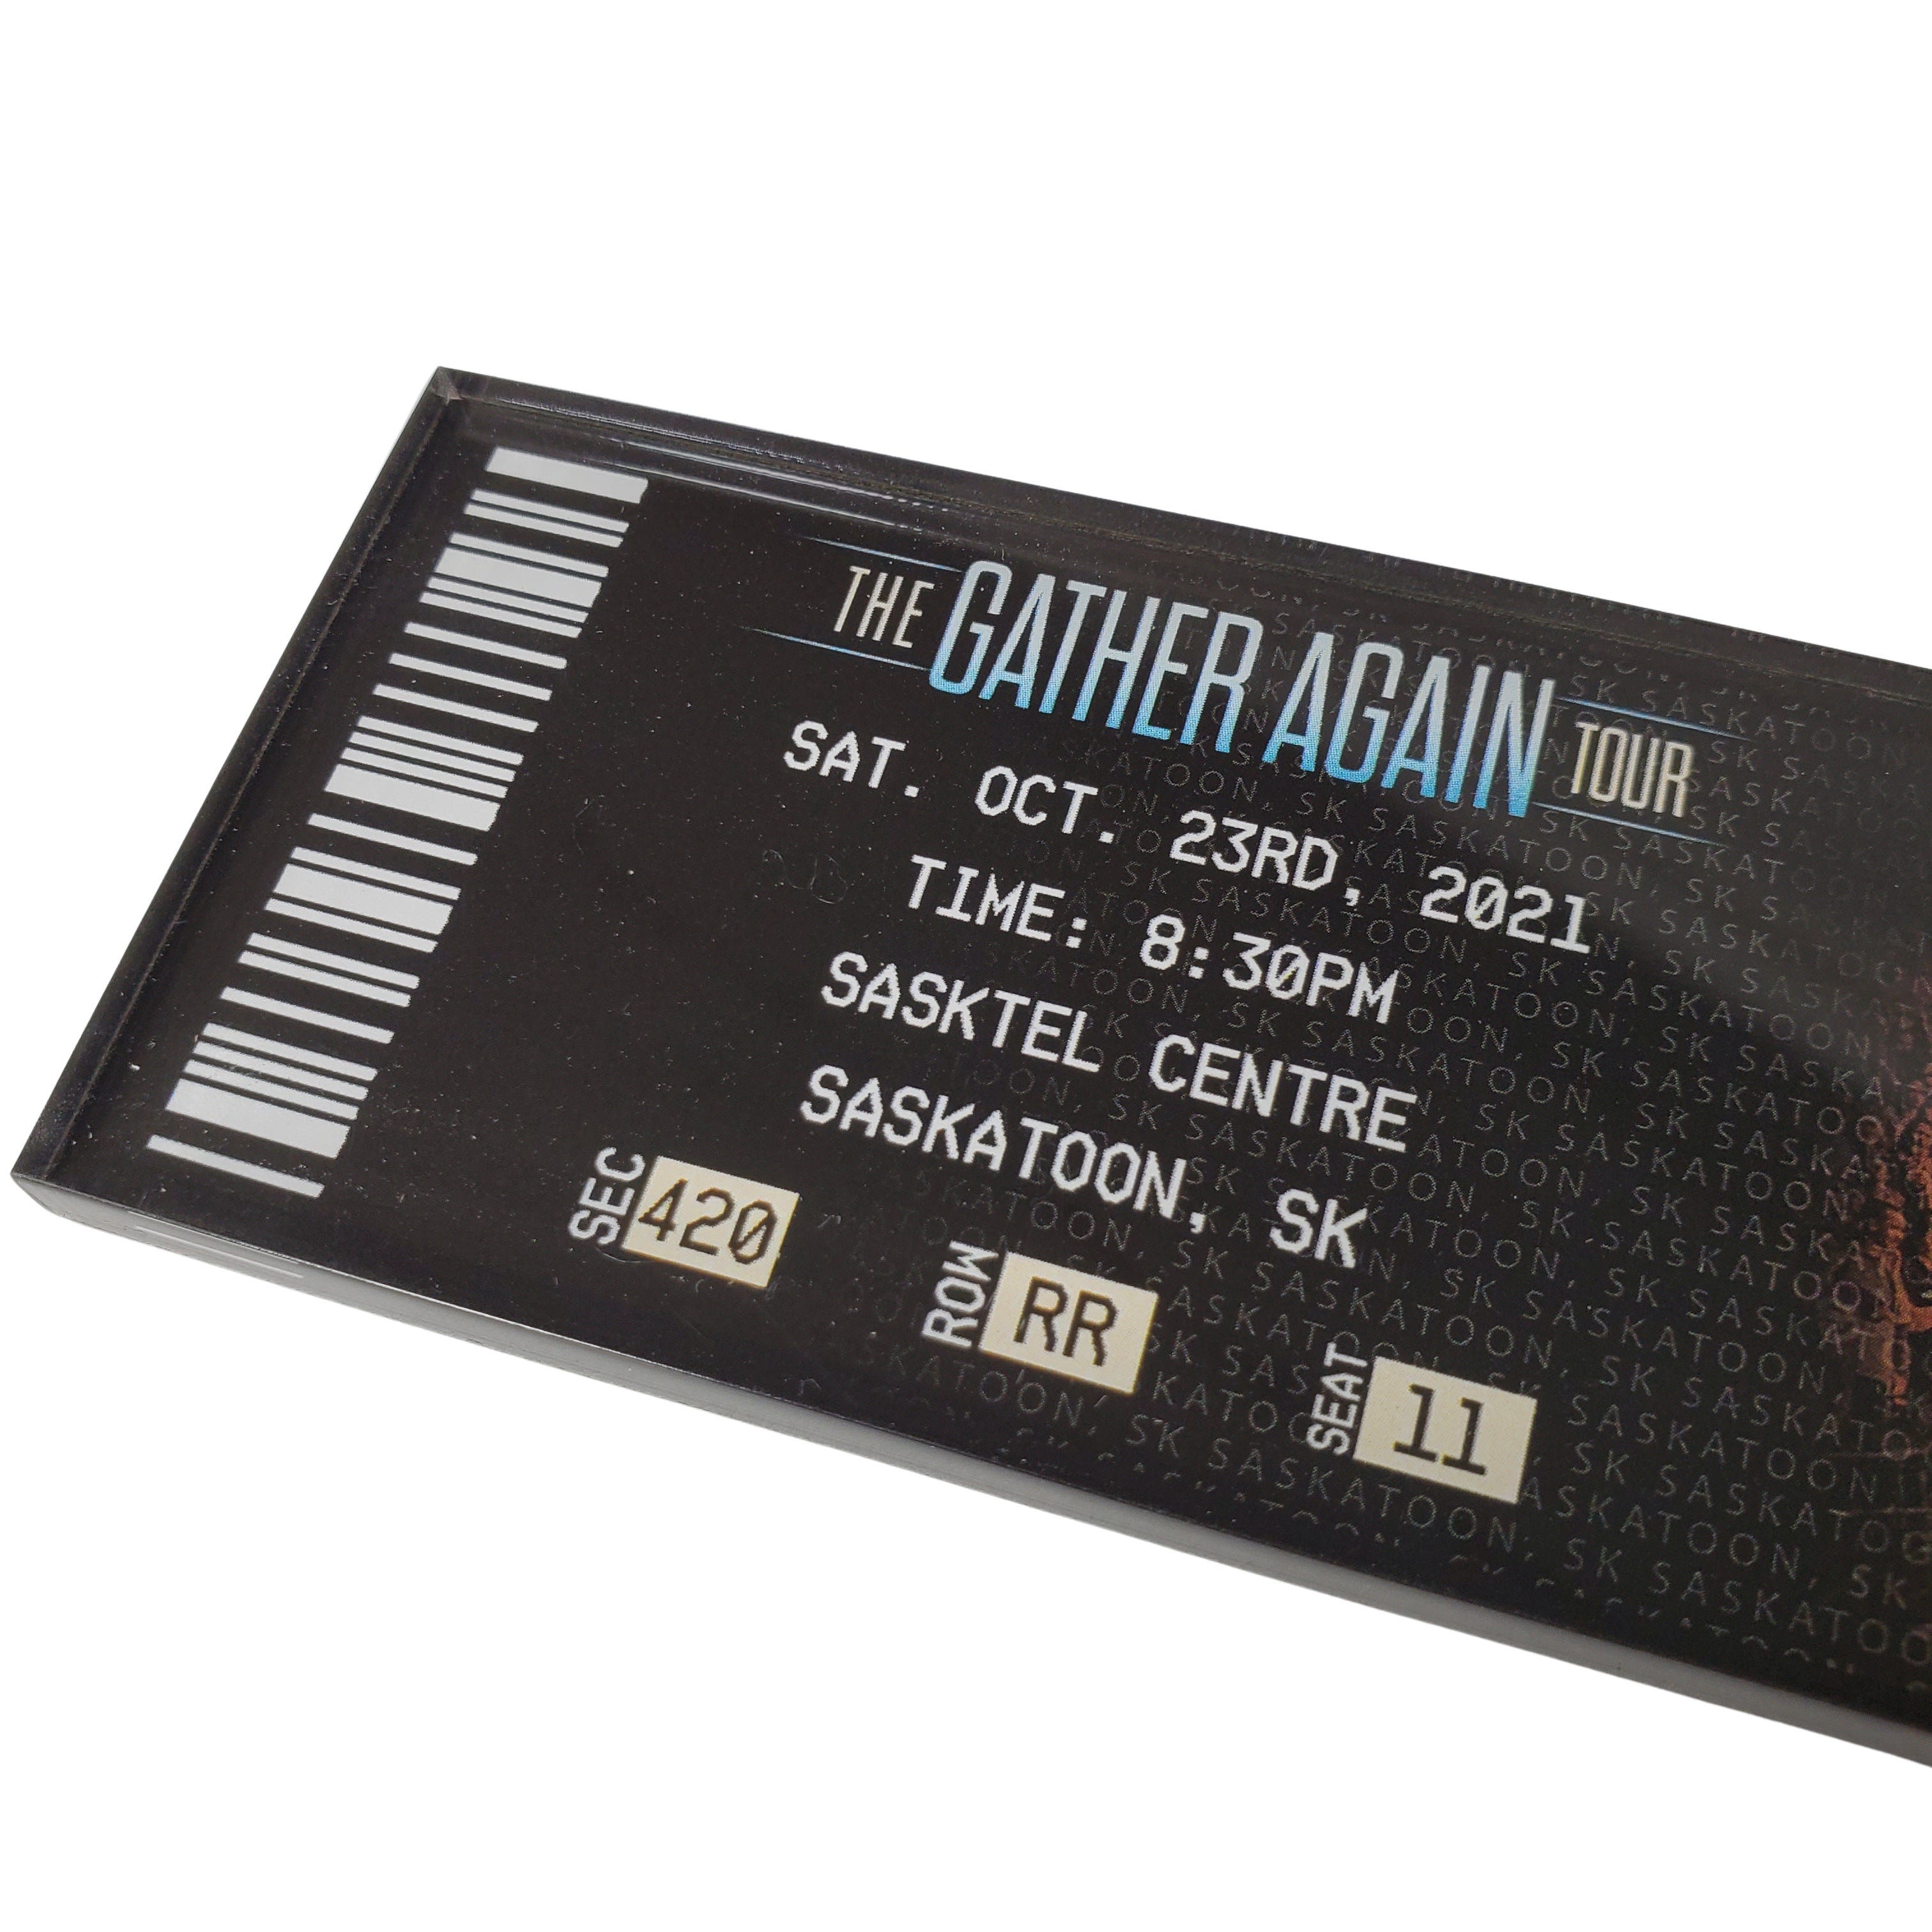 Gather Again Tour Ticket Magnet - Seattle, WA